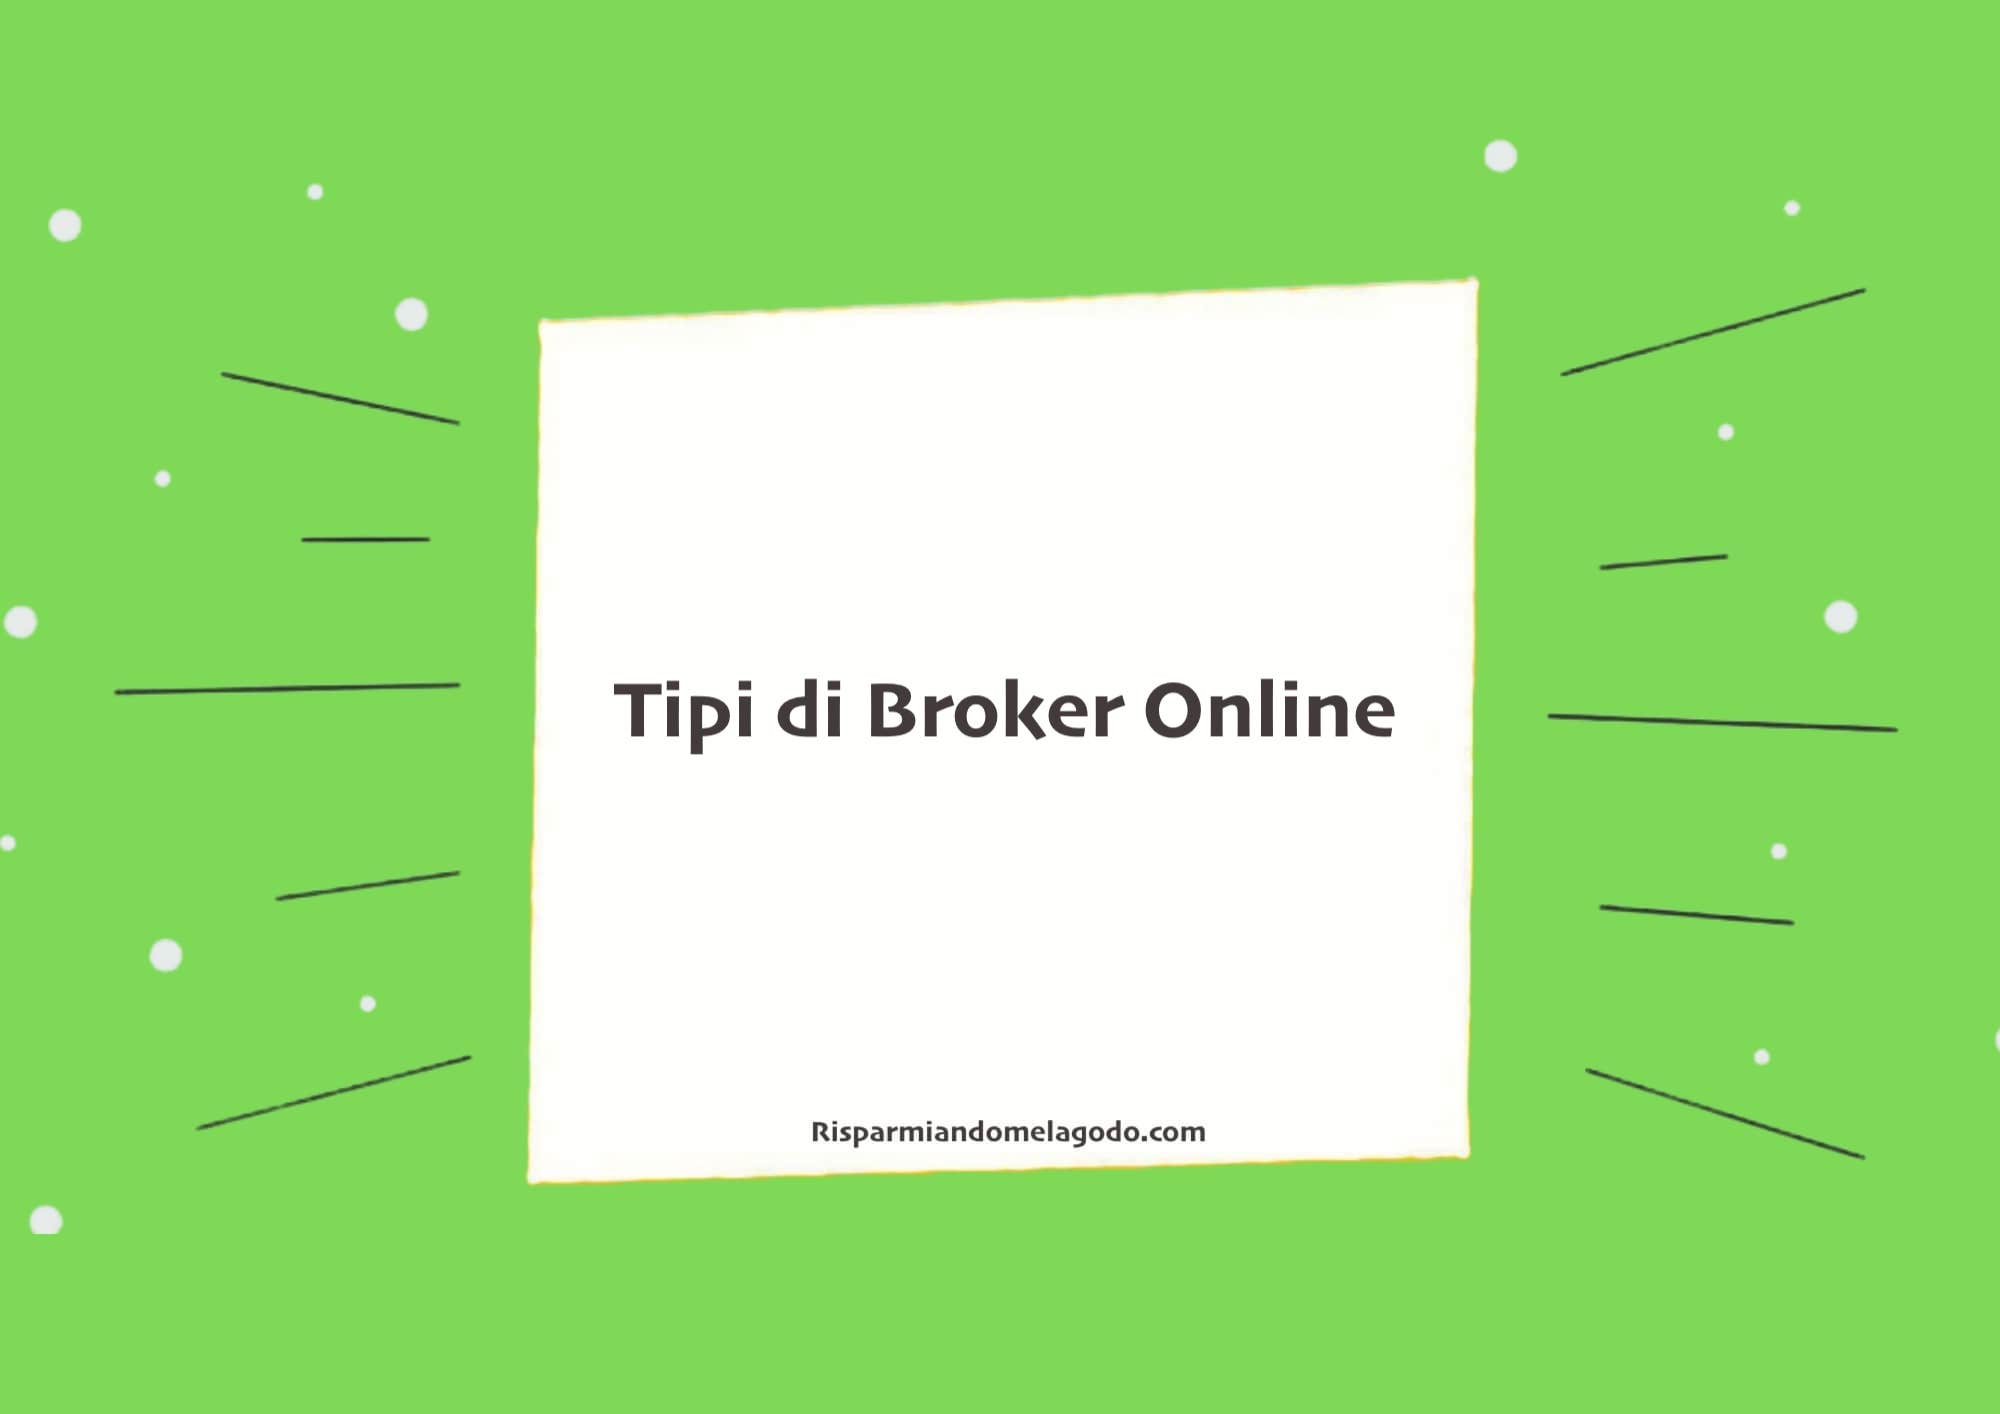 Tipi di Broker Online